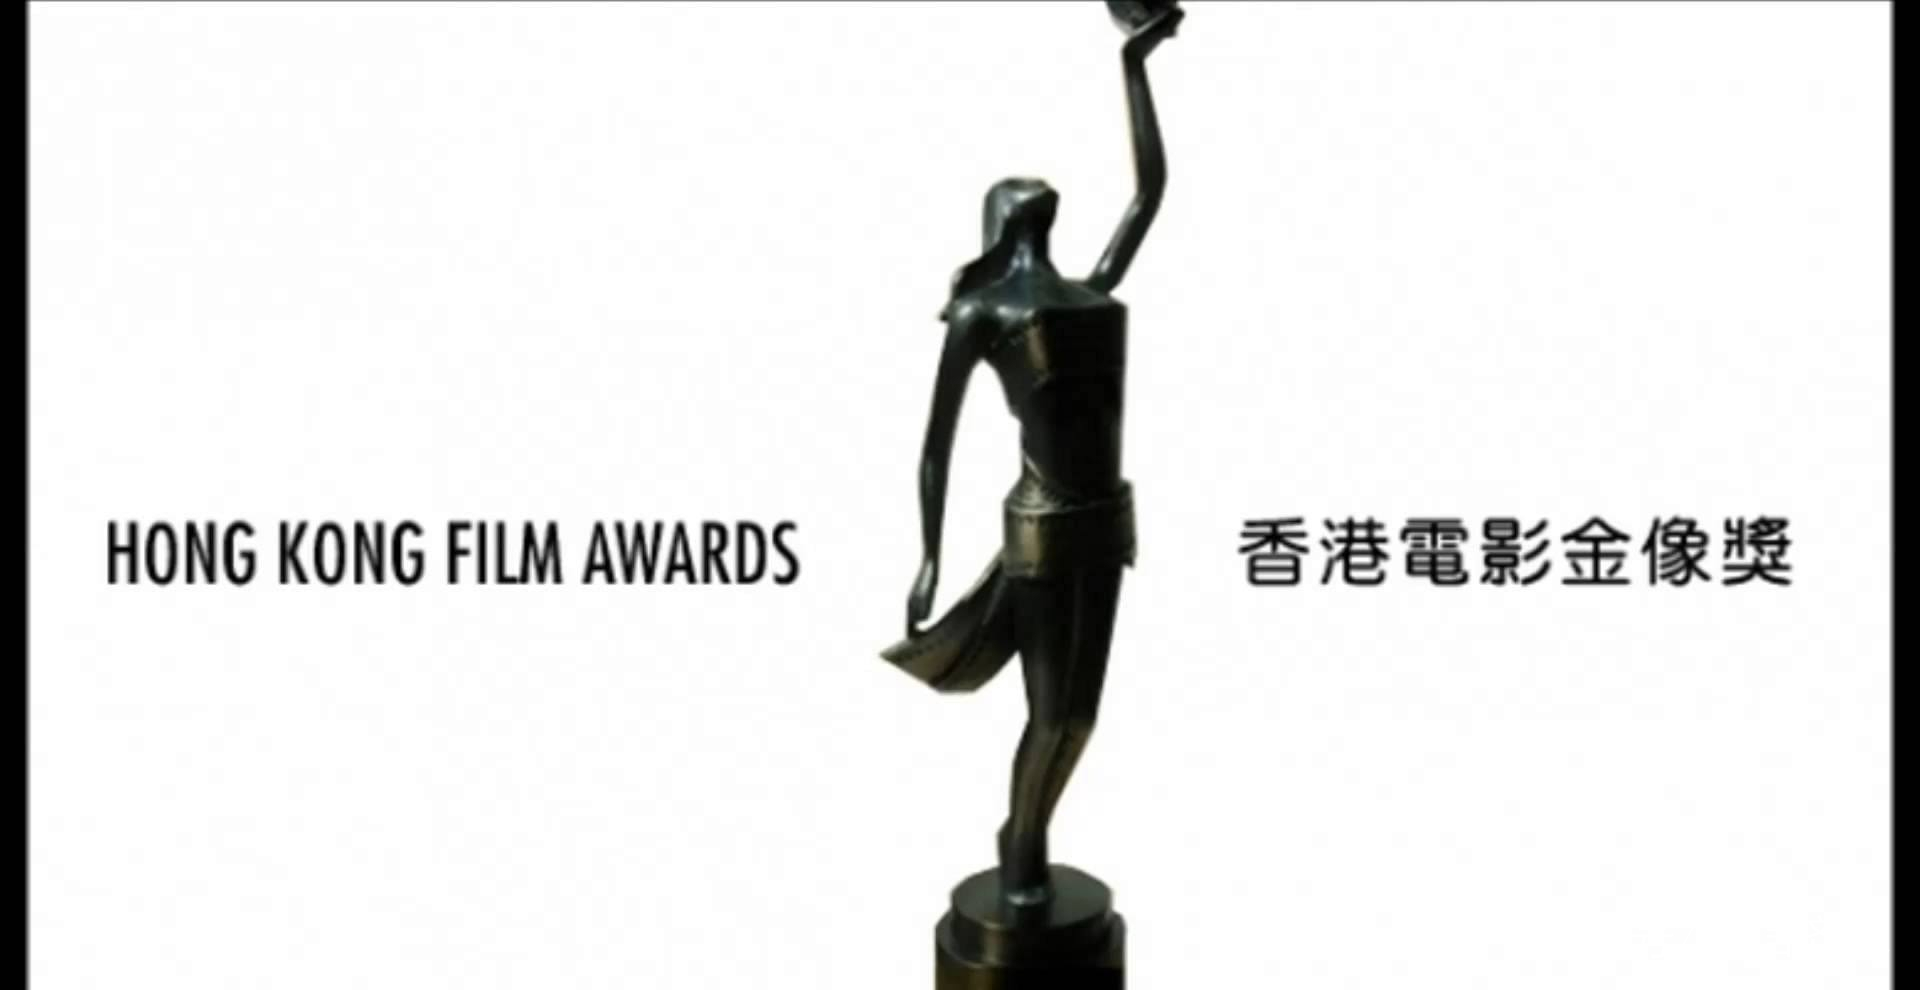 Nomination prediction for the 40th Hong Kong Film Awards, Andy Lau